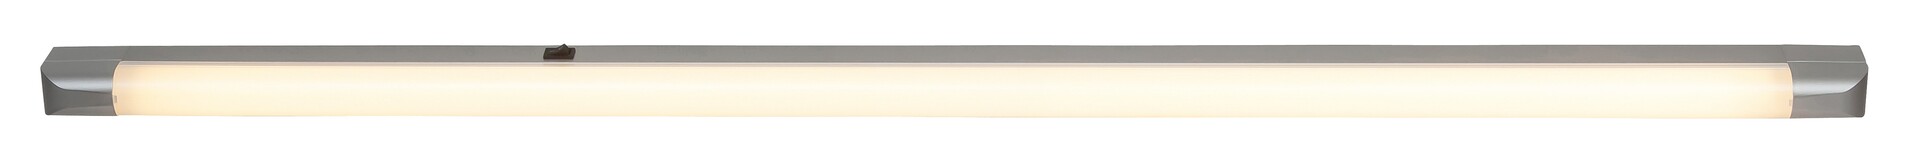 Corp band light de perete T8 36W arg.2309 |inclus timbru verde 1.00lei 2309